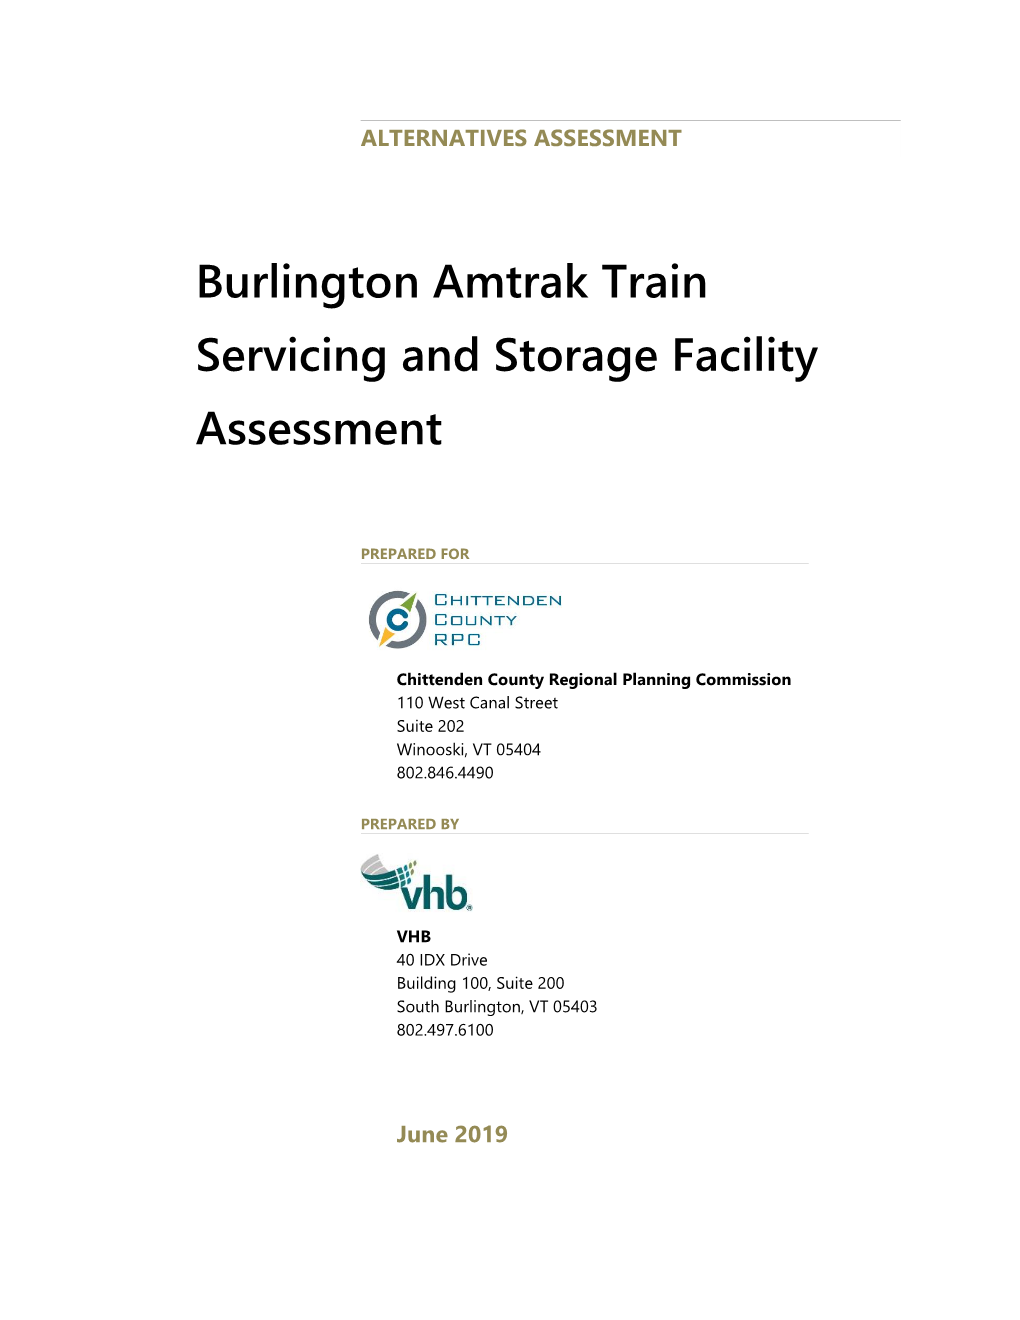 Burlington Amtrak Train Servicing and Storage Facility Assessment